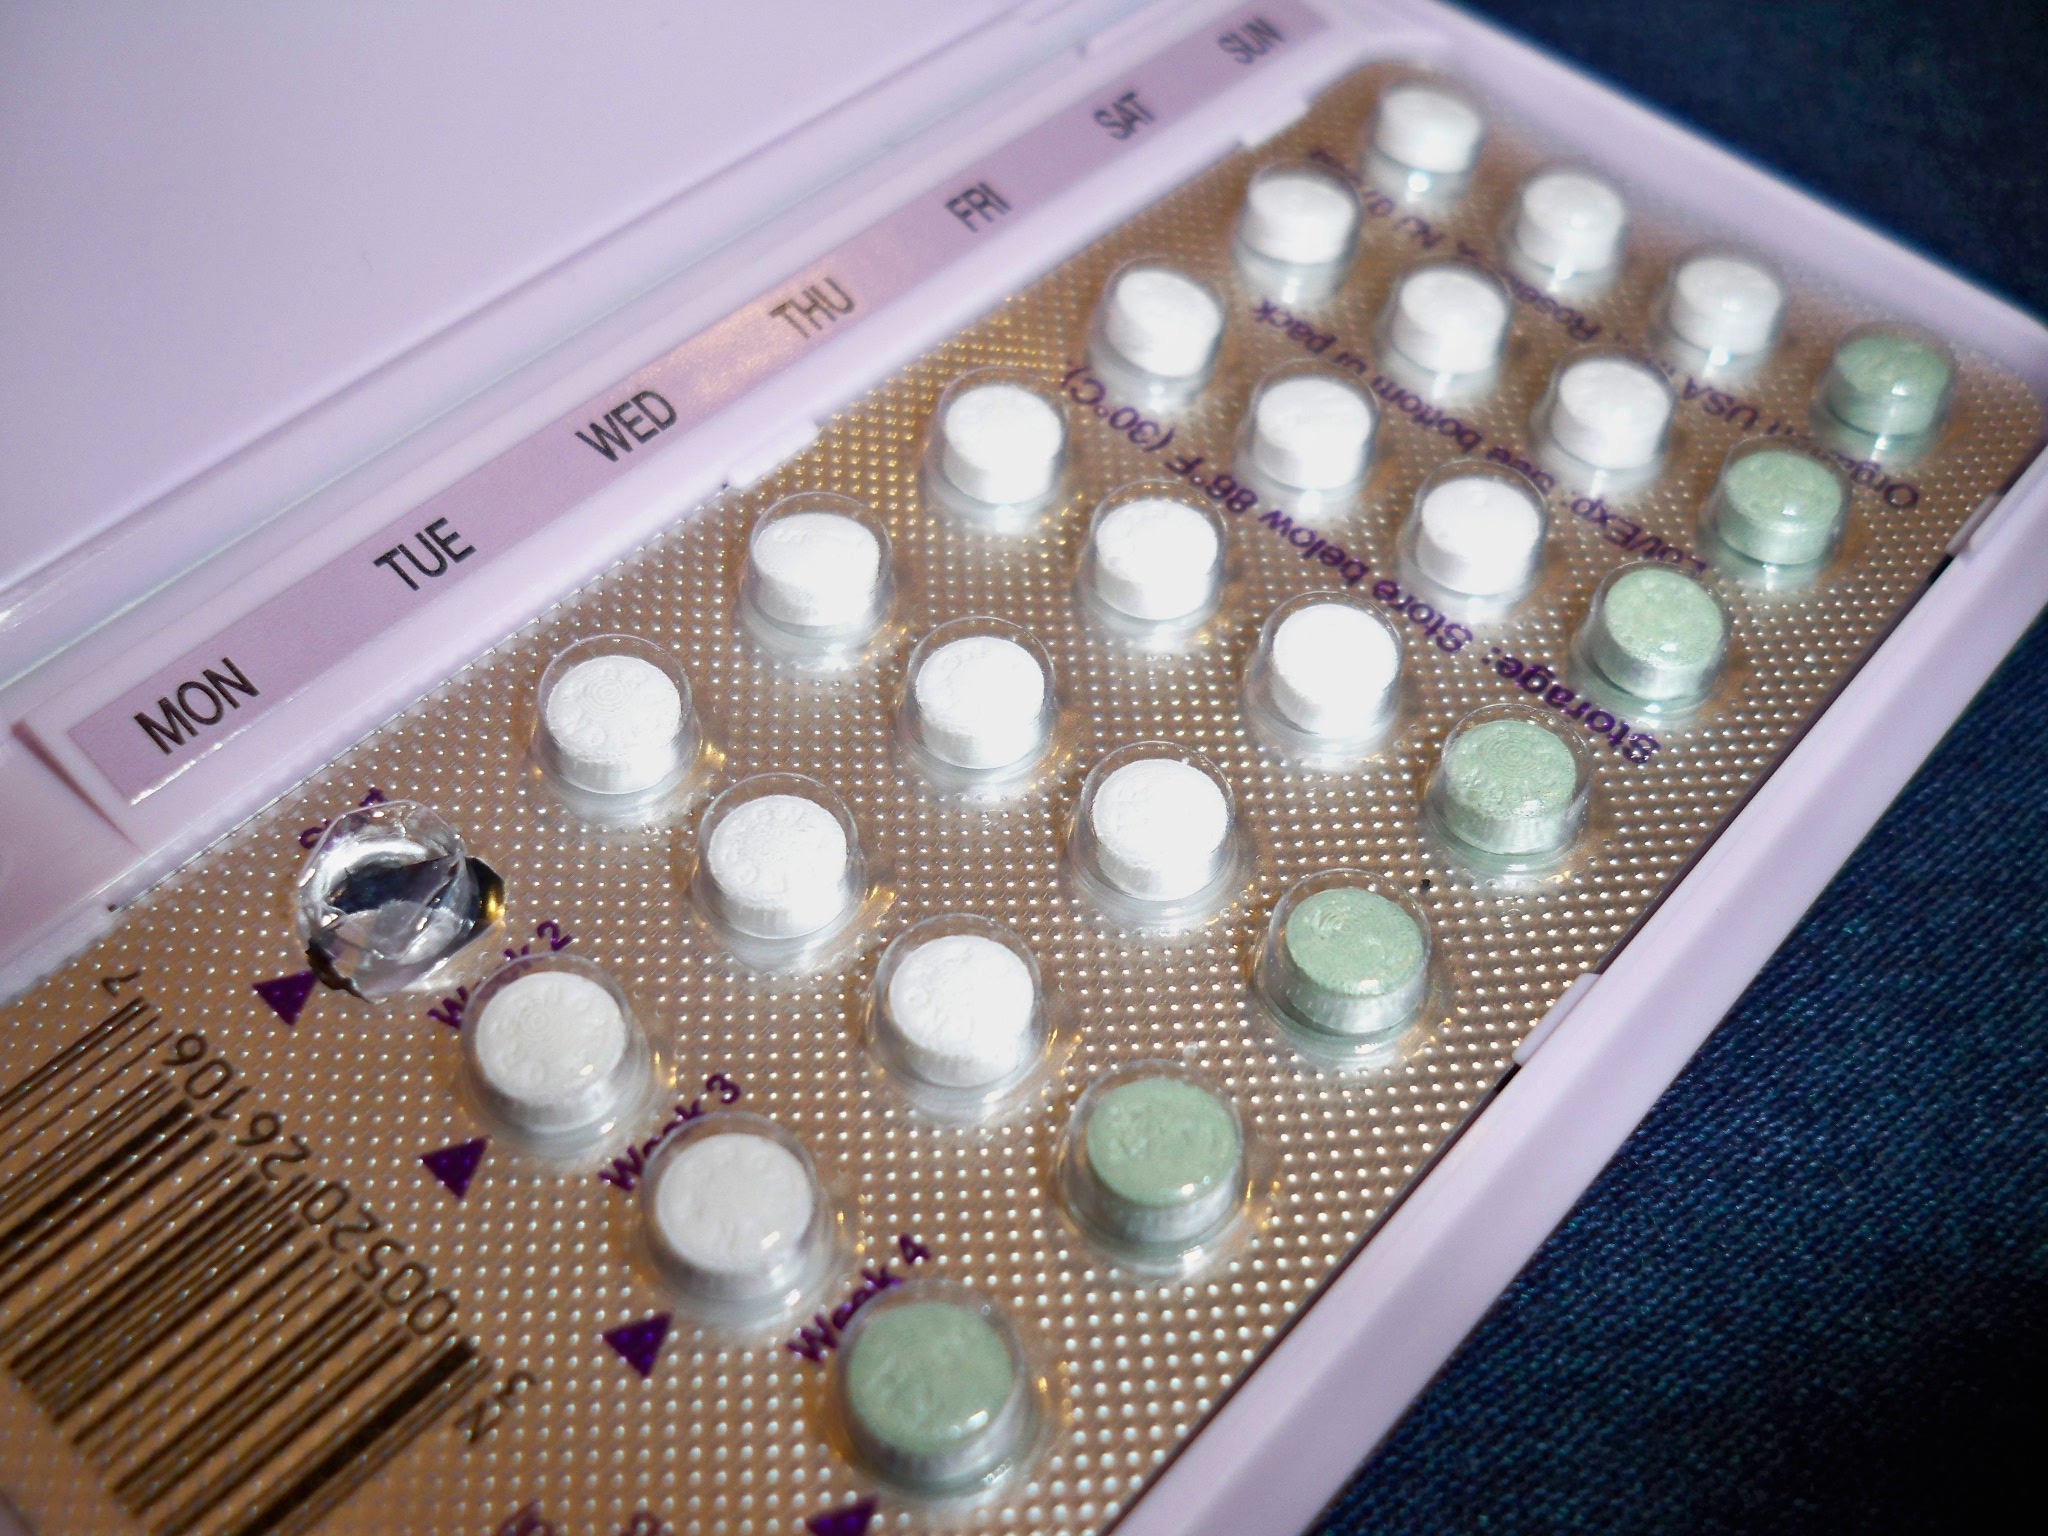 New Study Presents Possibility of a Male “Birth Control Pill”